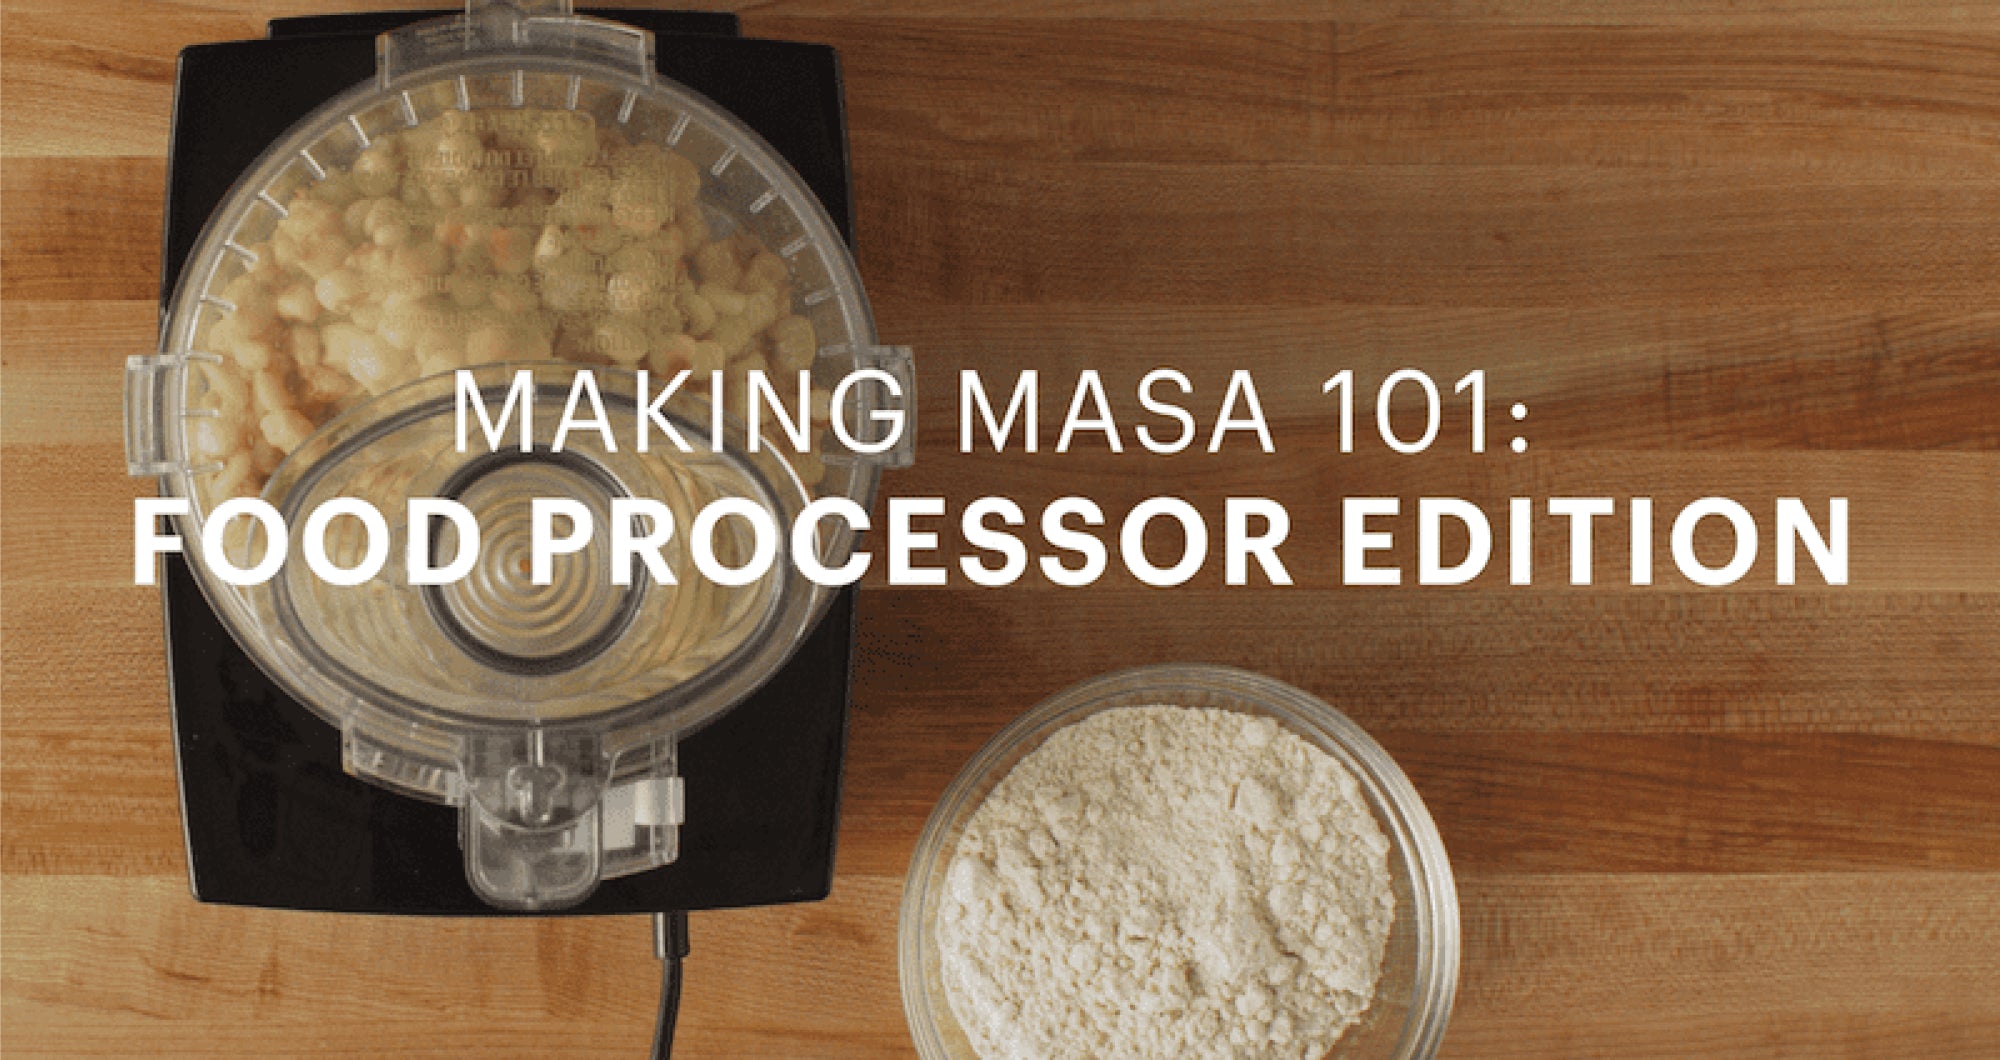 How to Make Masa using a Food Processor